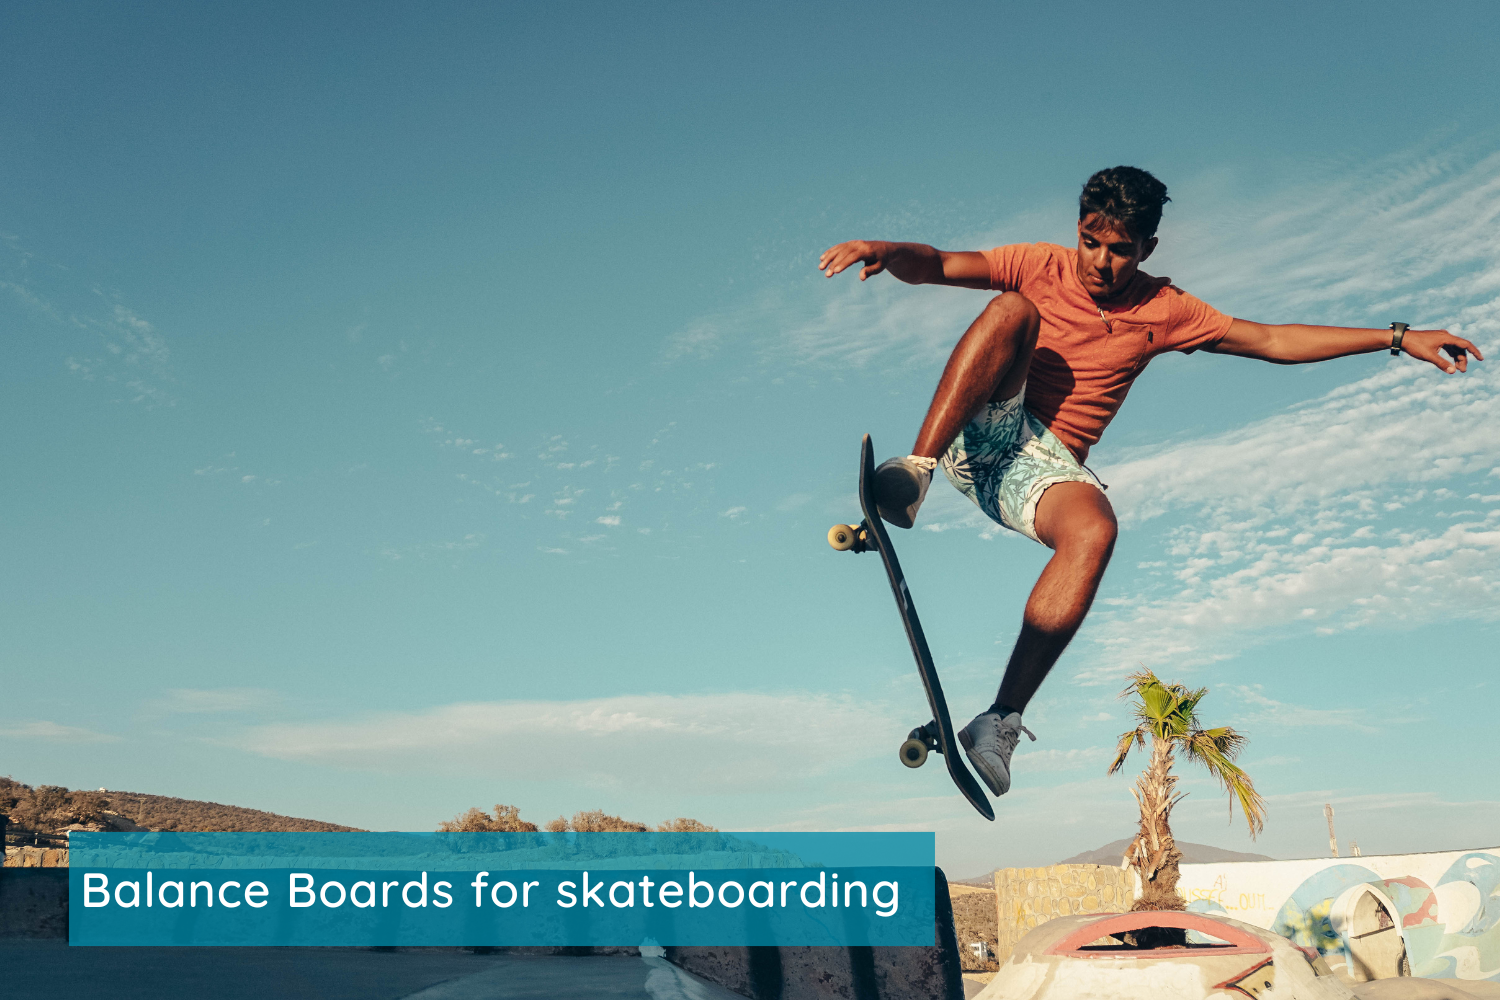 Balance Boards for skateboarding